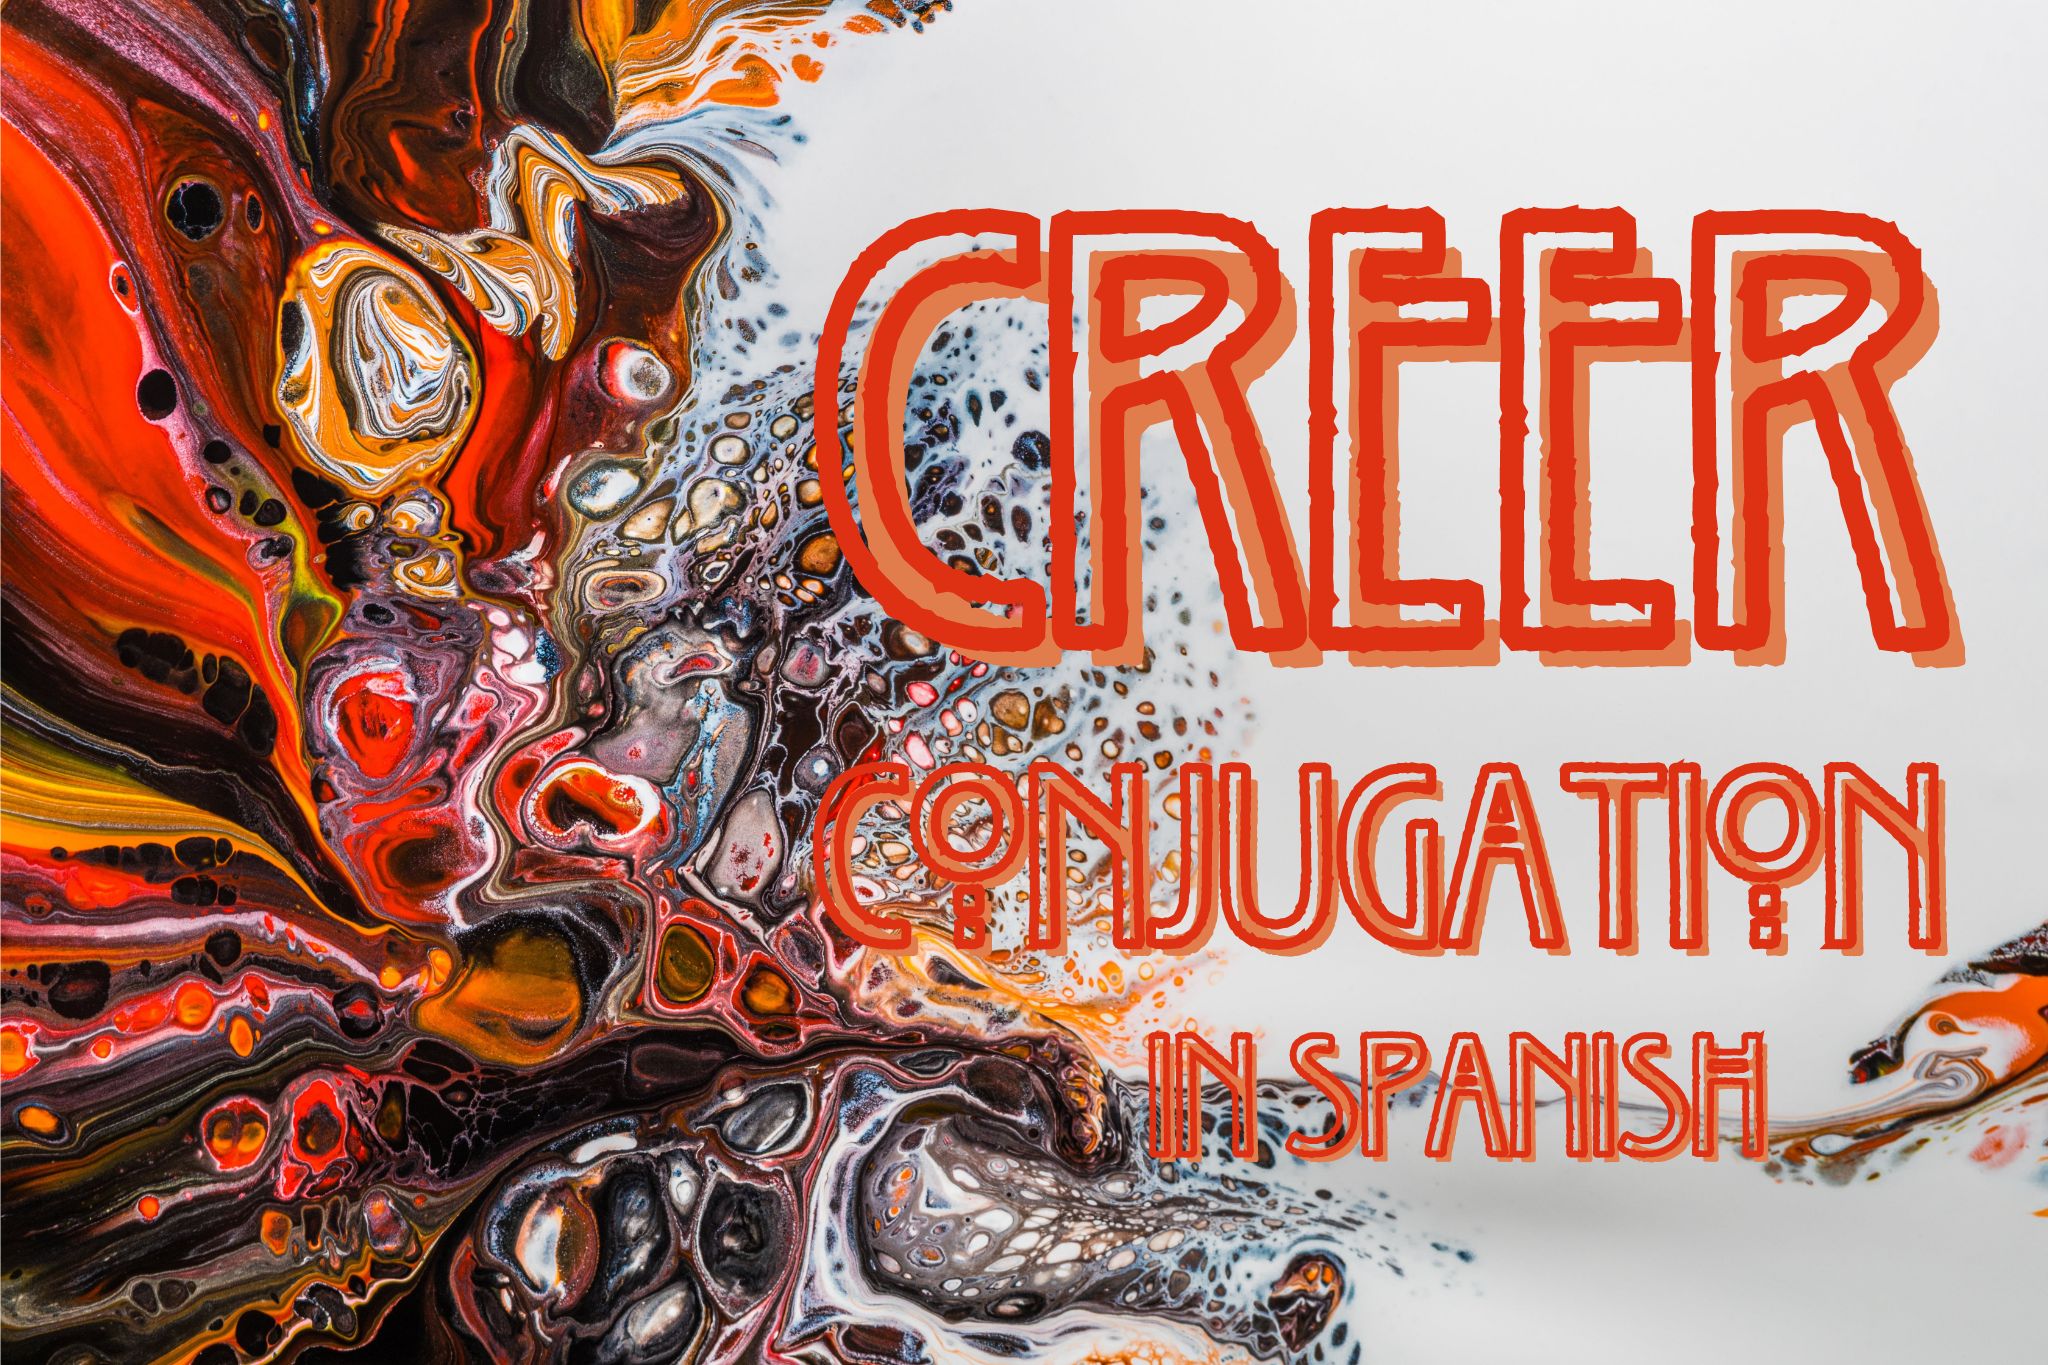 Creer conjugation in Spanish